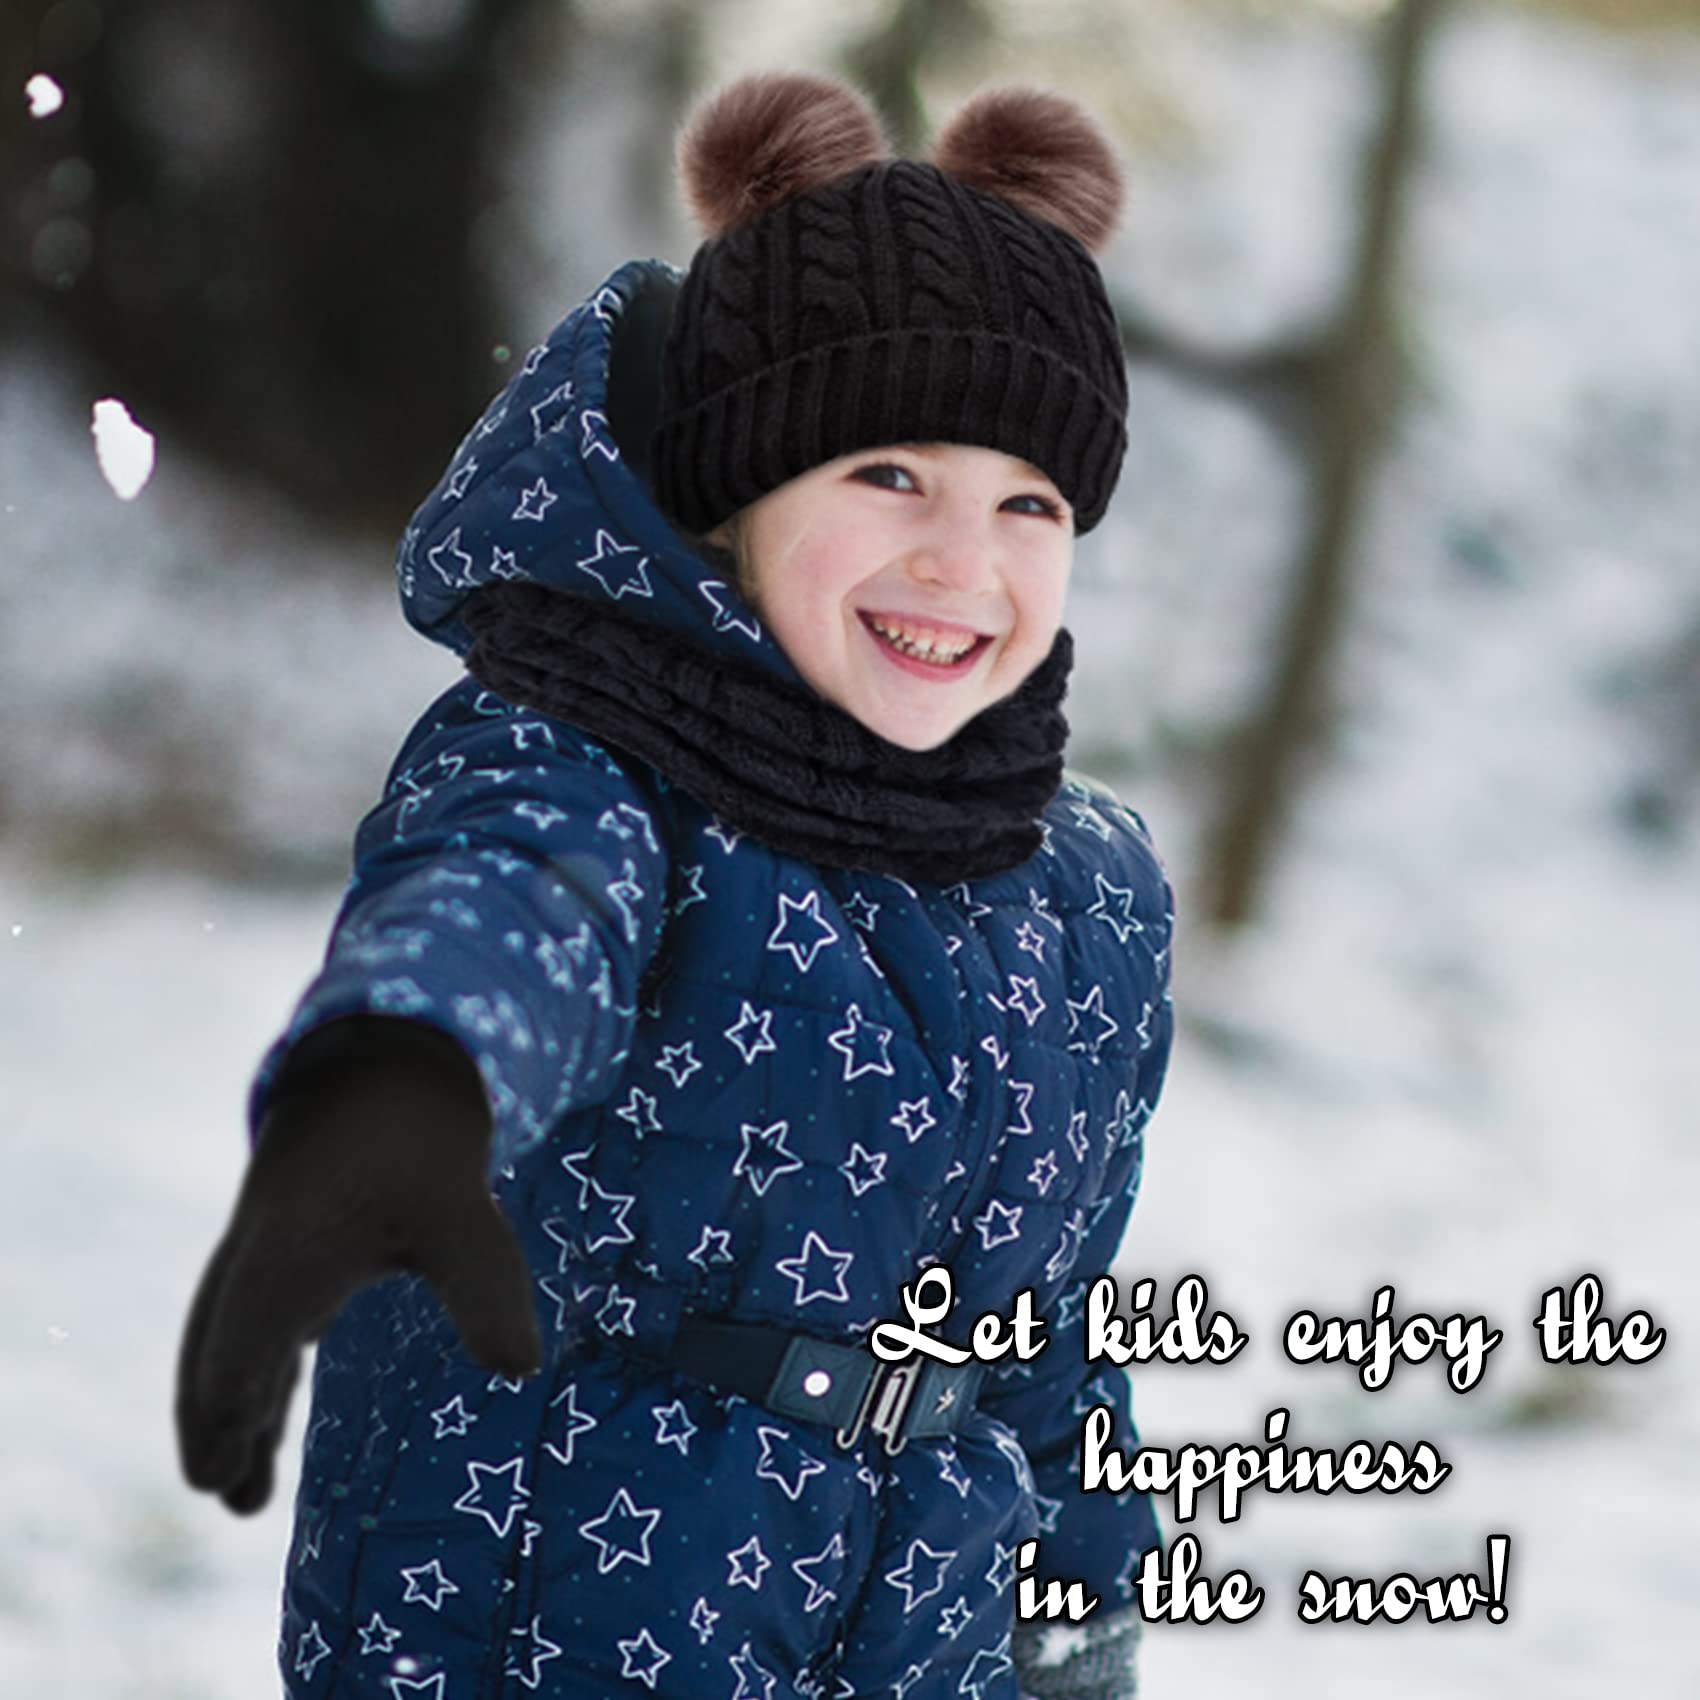 3 Pcs Kids Winter Beanie Hat Scarf Gloves Set for Girls Boys Knit Warm Pompom Toddler Hat Mittens Neck Warmer, A Black